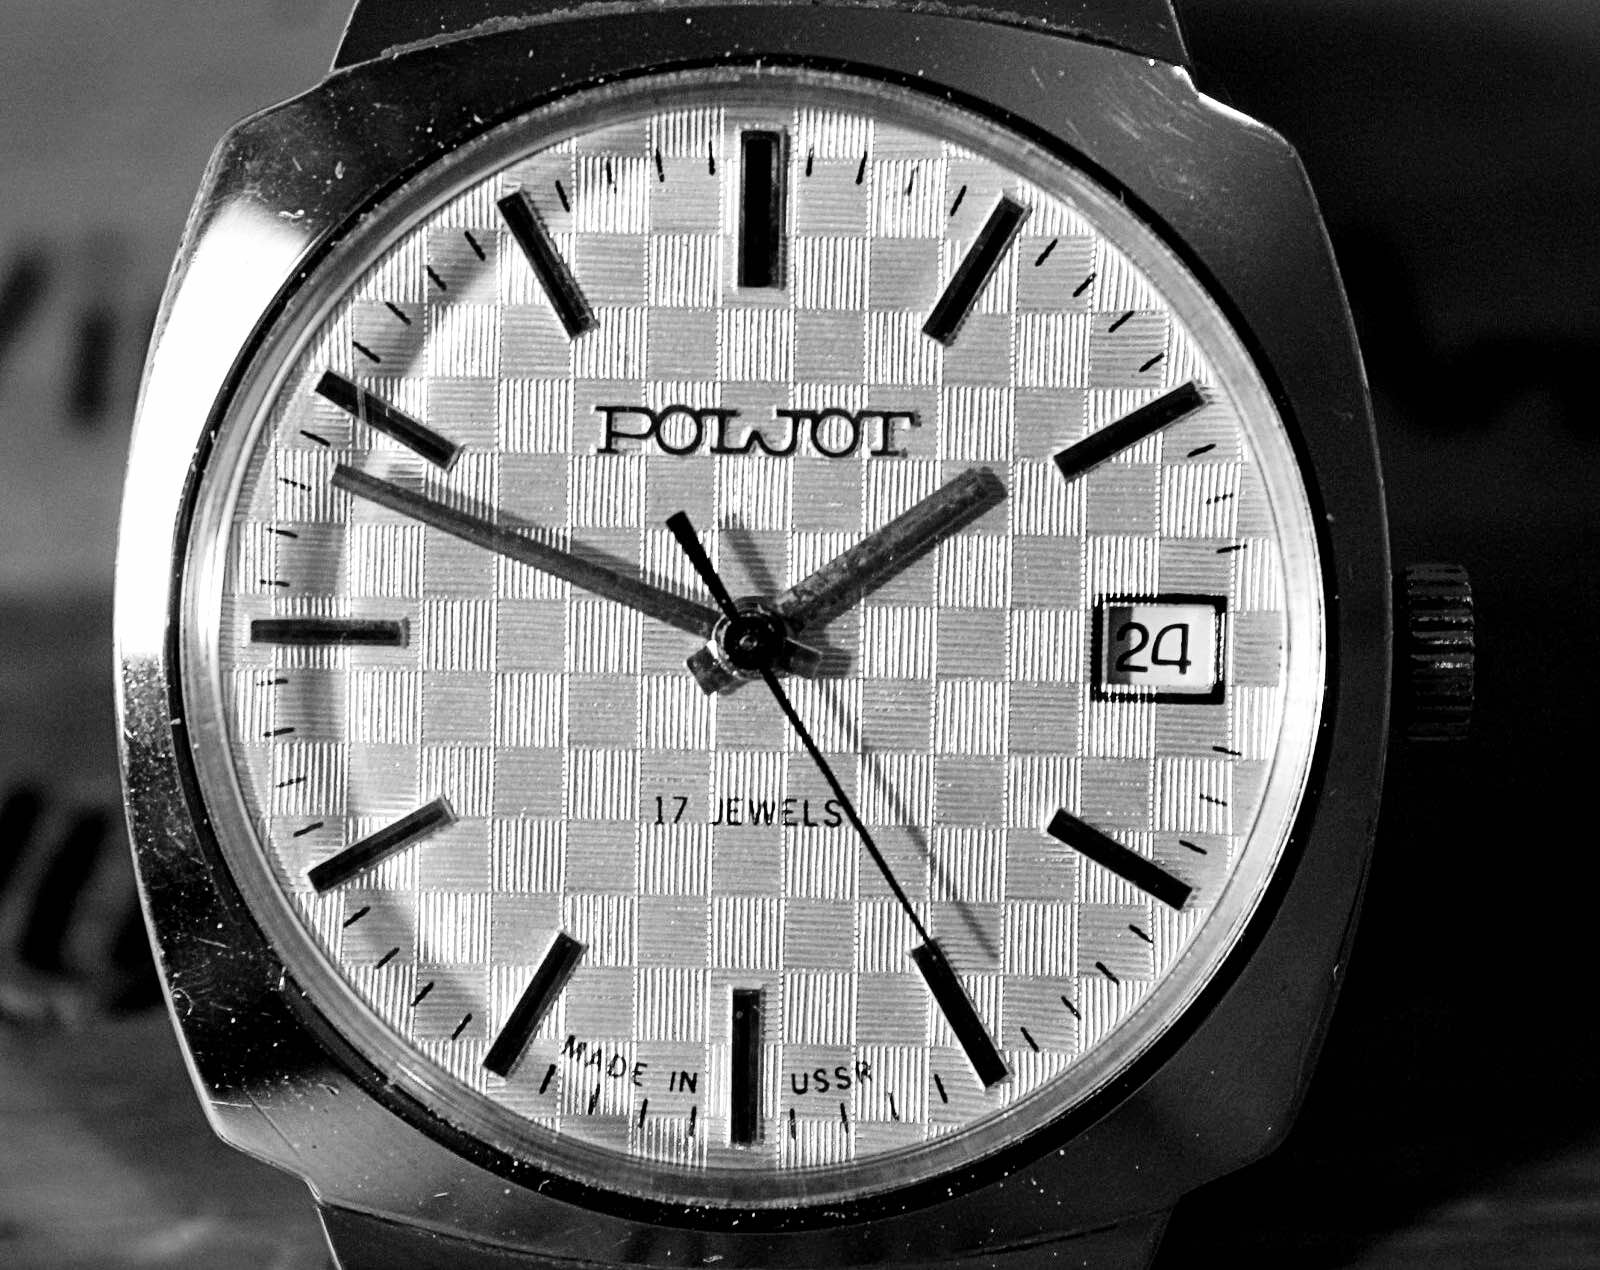 Reloj de marca Poljot (fabricación soviética) / Foto: Tomada de www.hablemosderelojes.com